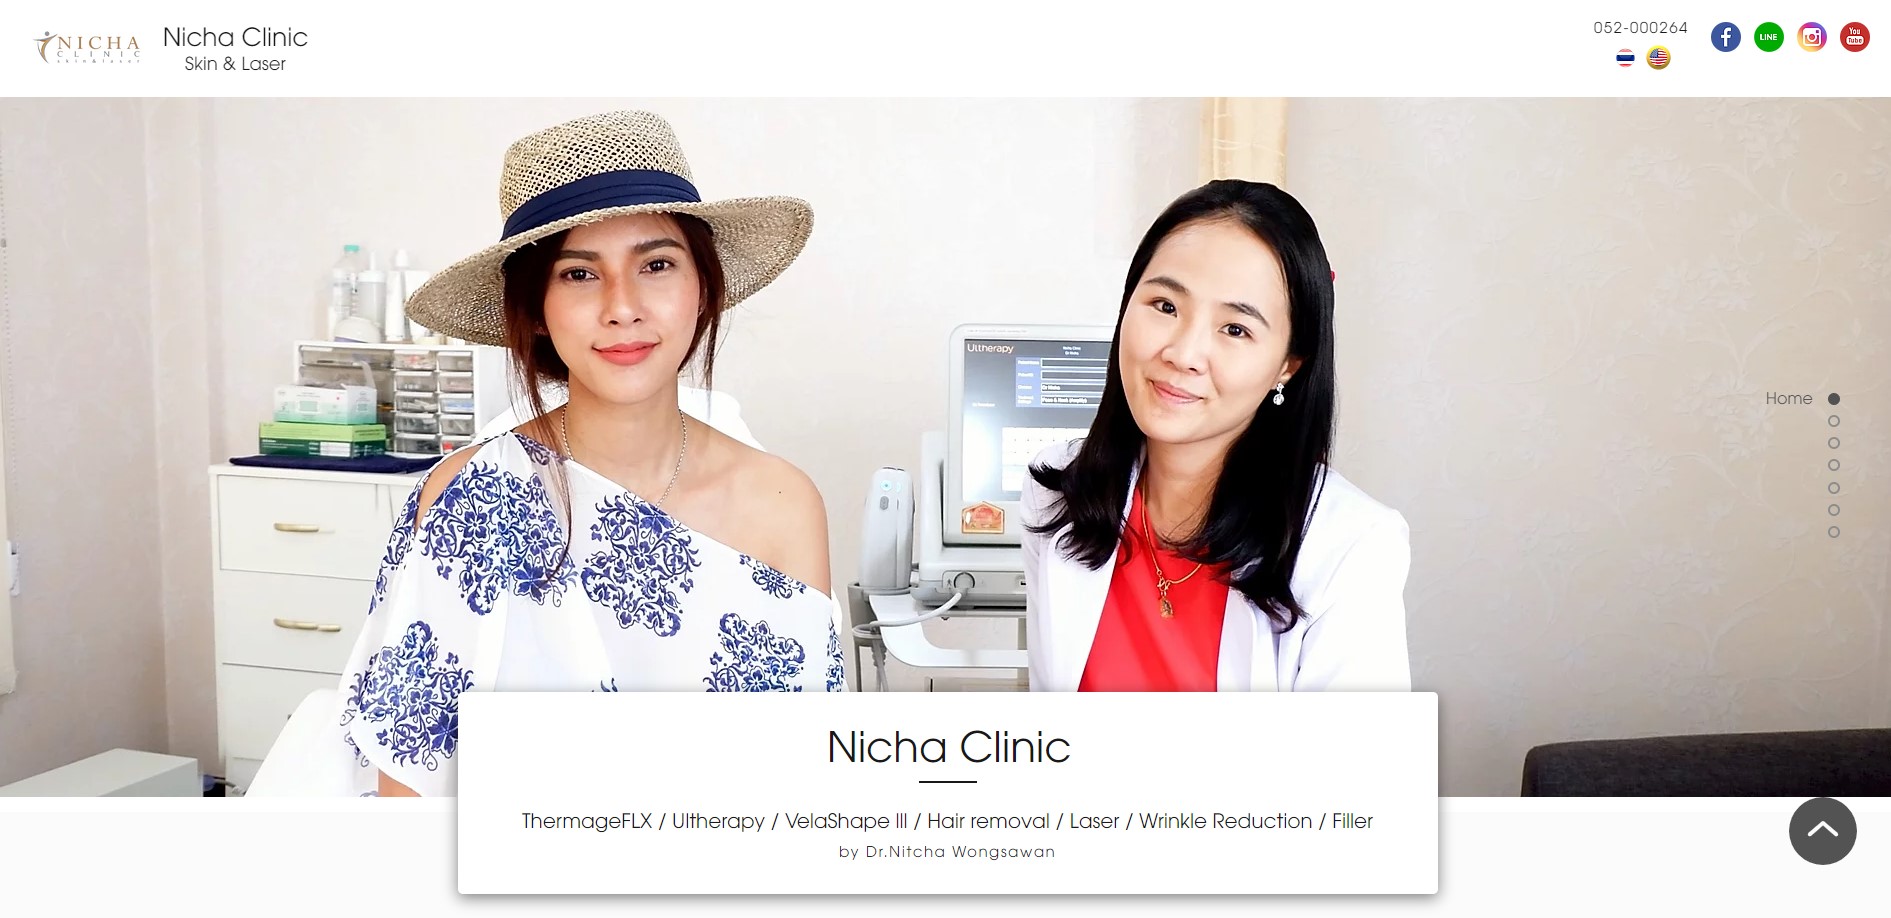 Nicha Clinic